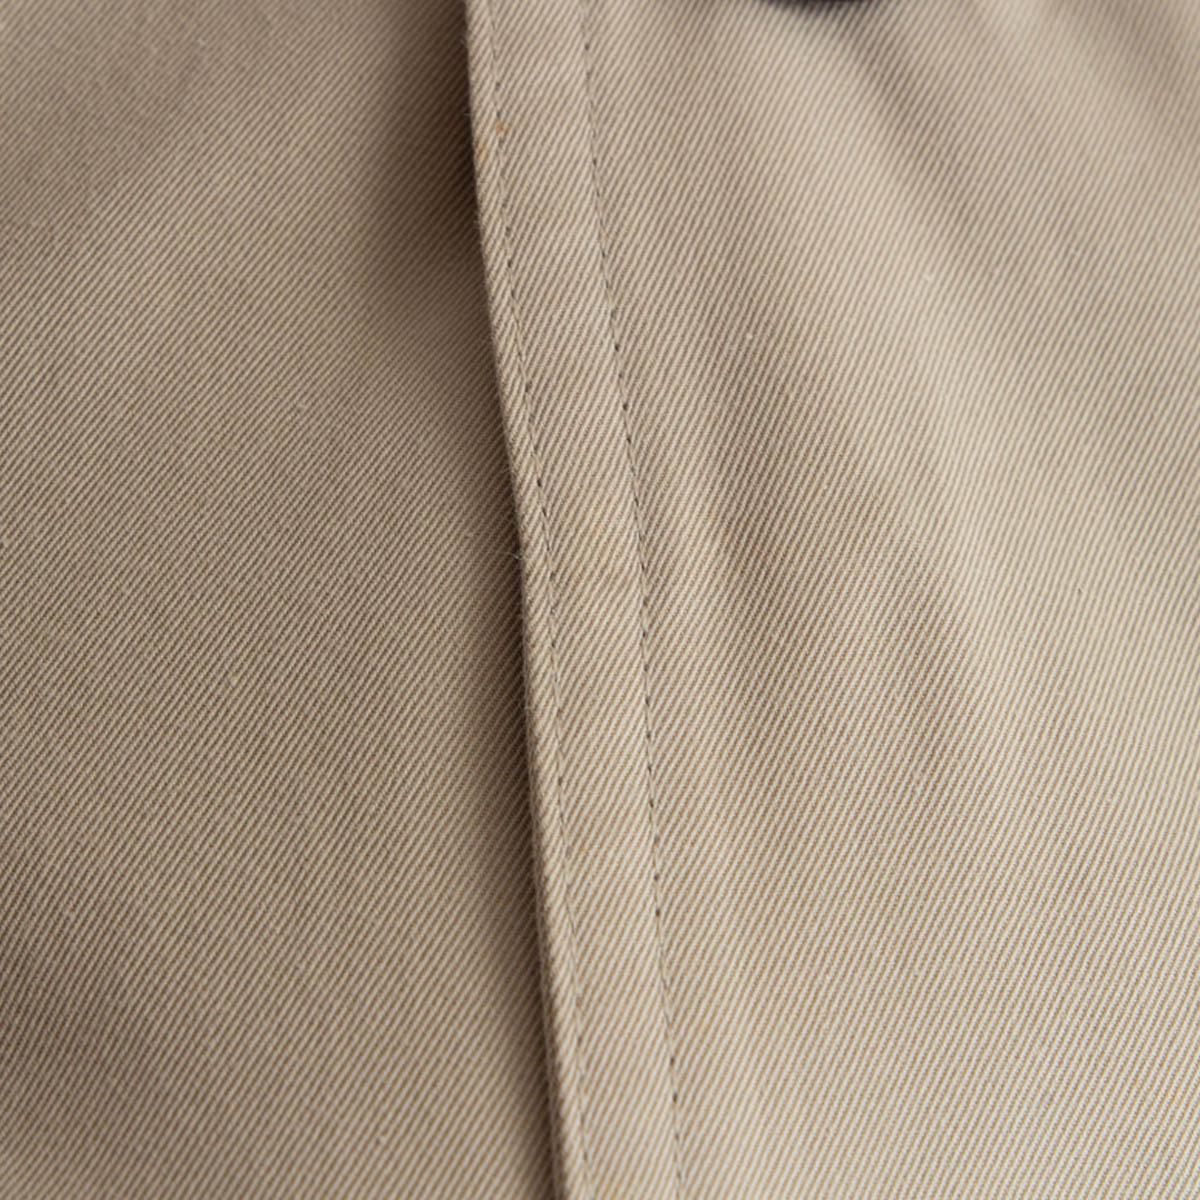 Beige BURBERRY beige cotton KENSINGTON DOUBLE BREASTED TRENCH Coat Jacket 8 S